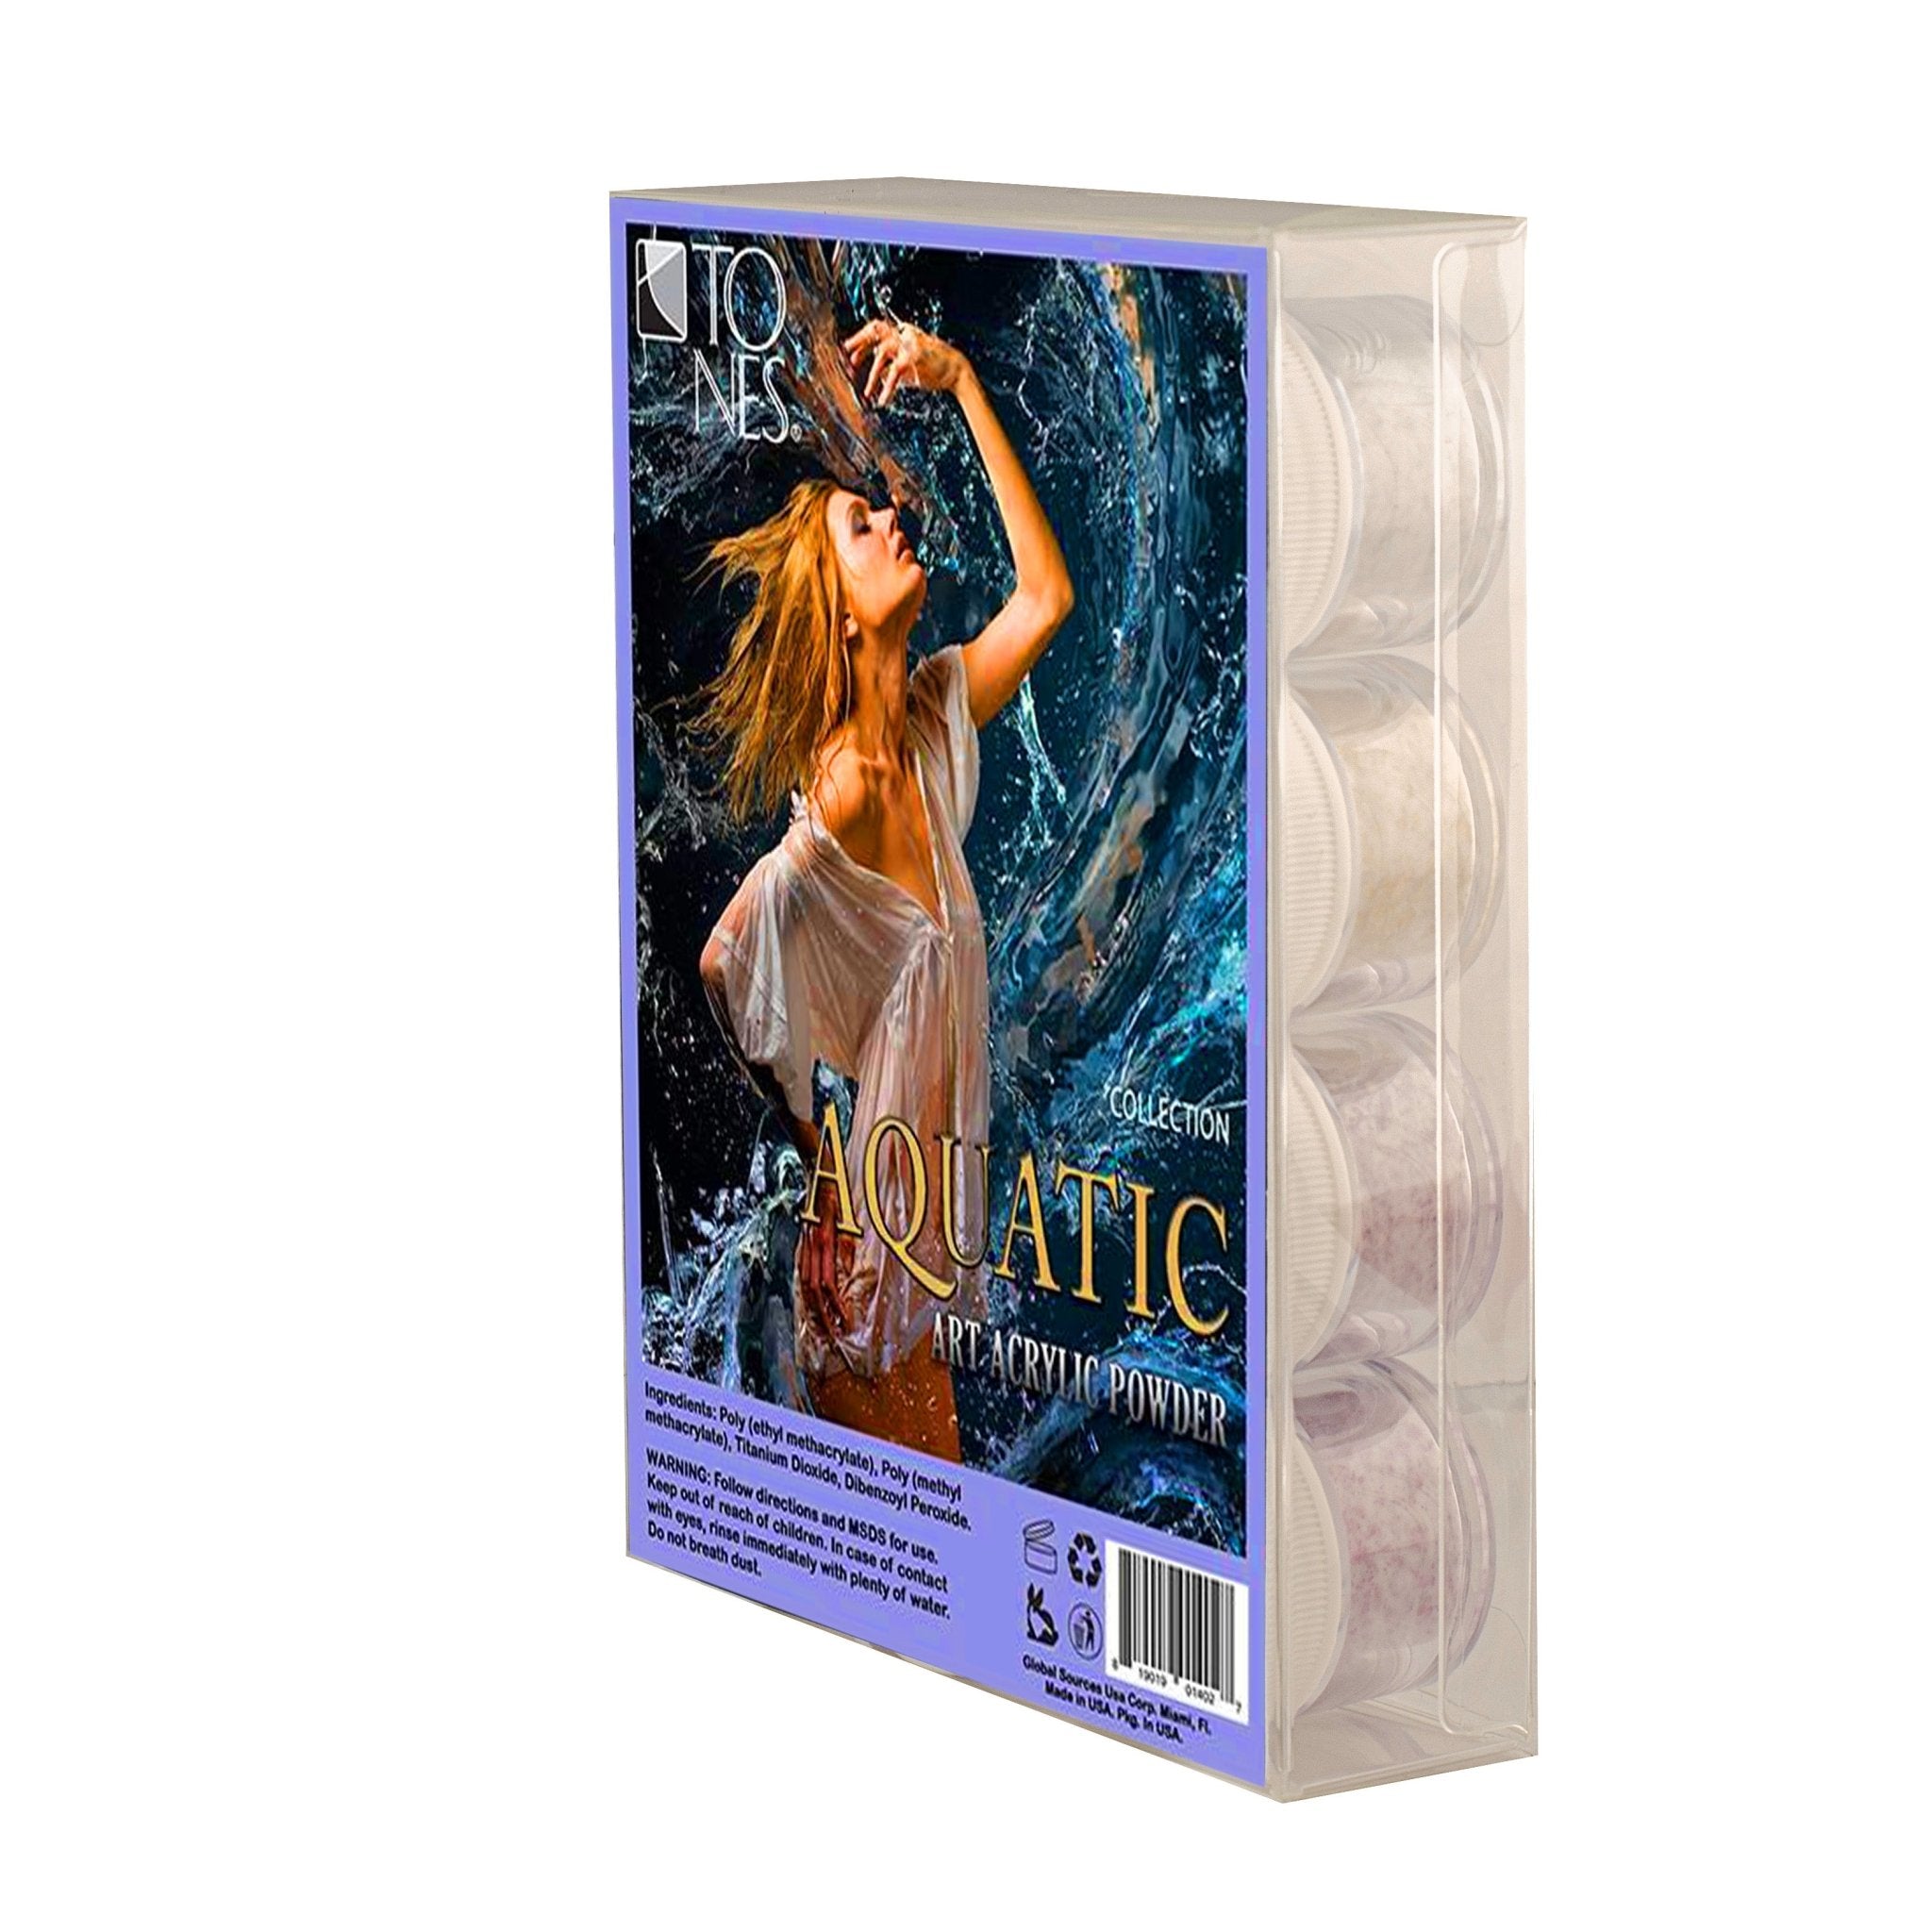 Acrylic Art Powder - Encapsulated Collection: Aquatic (12 x 0.25 oz) - Tones